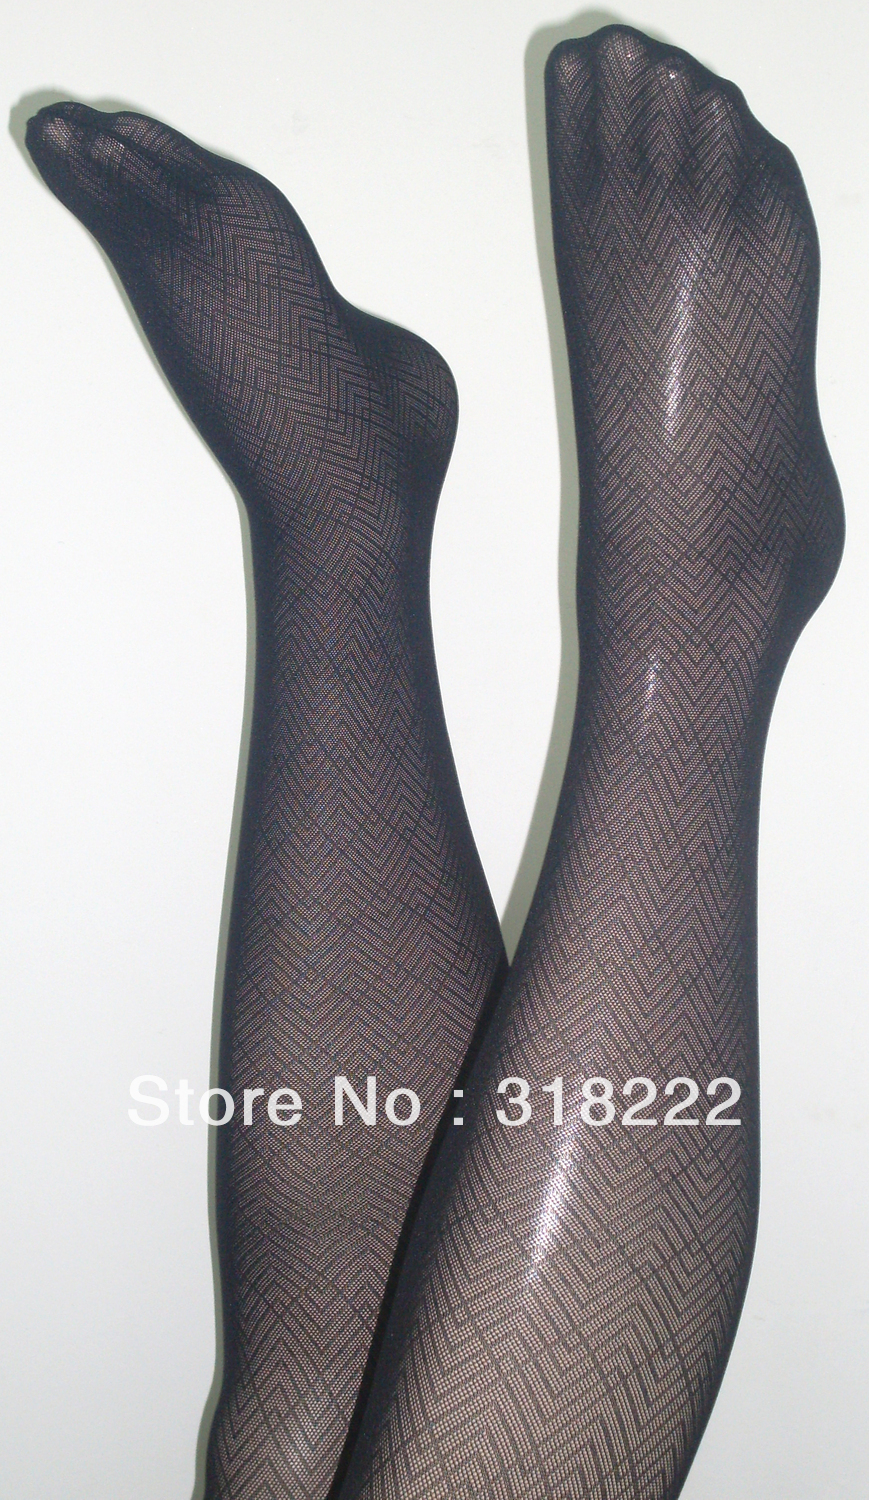 Sheer diamond pattern tights lady pantyhose in herringbone pattern  sexy pattern tights free shipping wholesale price